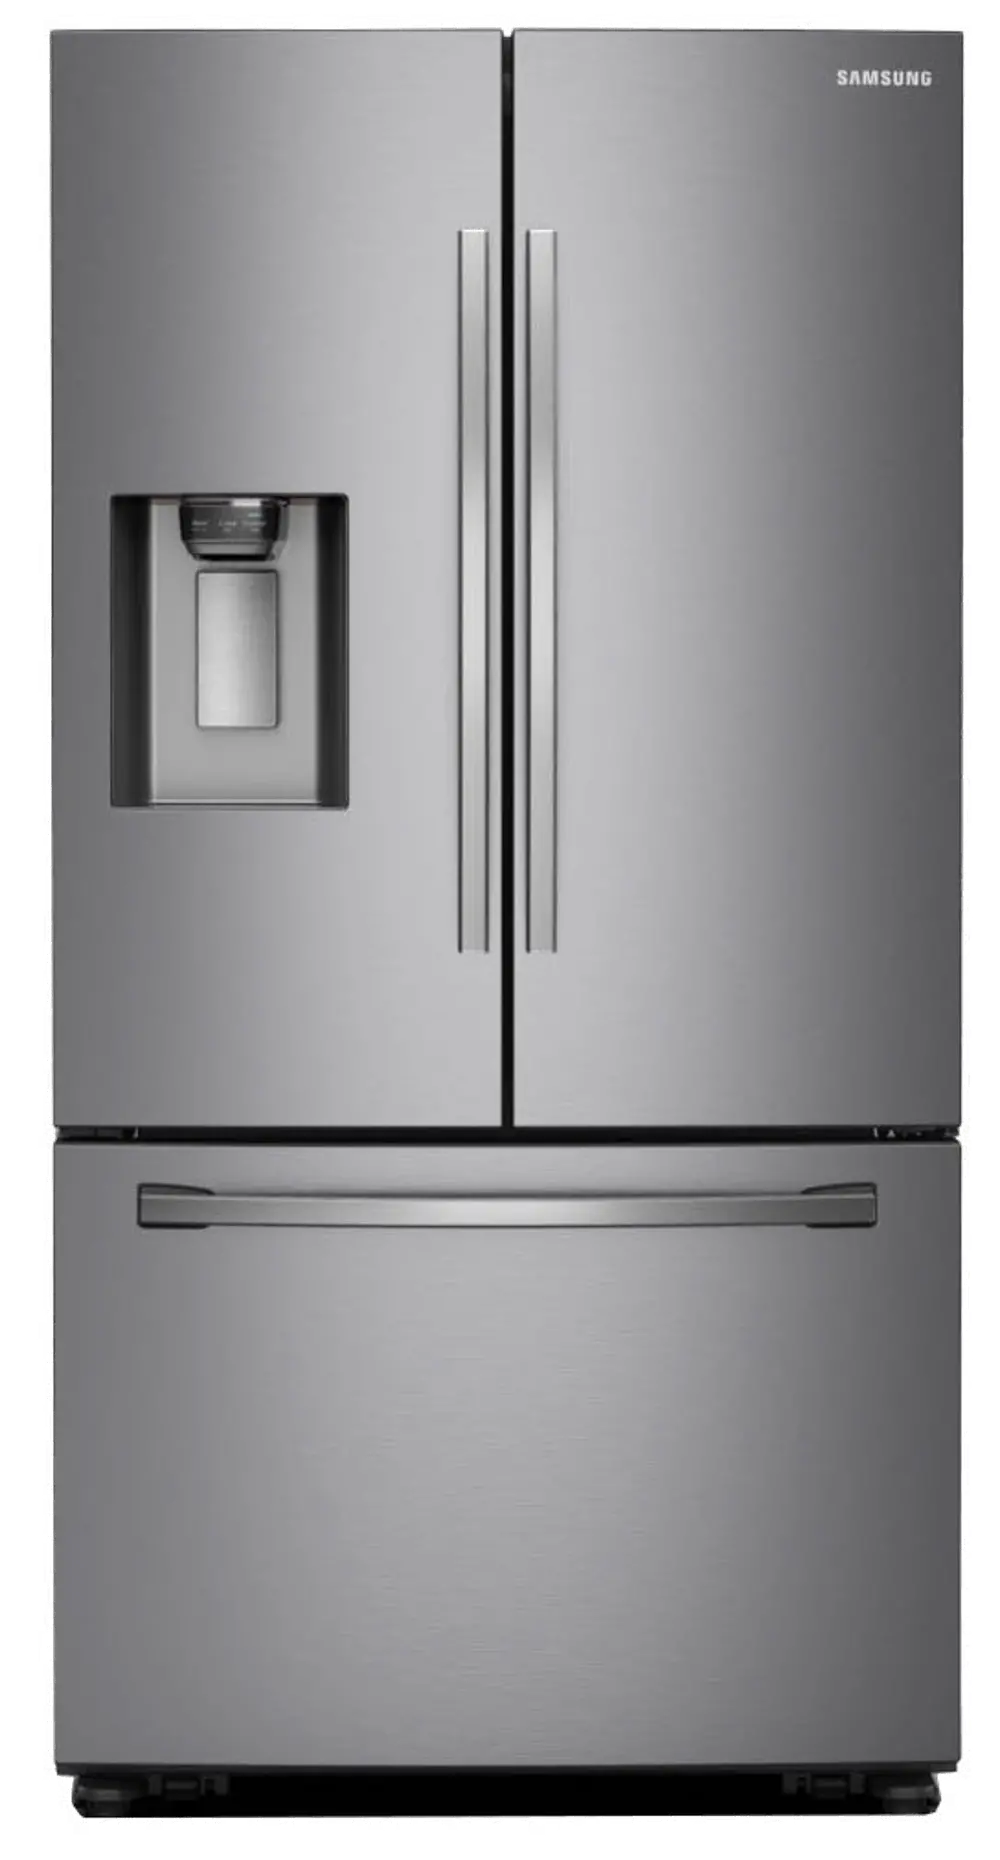 RF28R6201SR Samsung 28 cu ft French Door Refrigerator - Stainless Steel-1